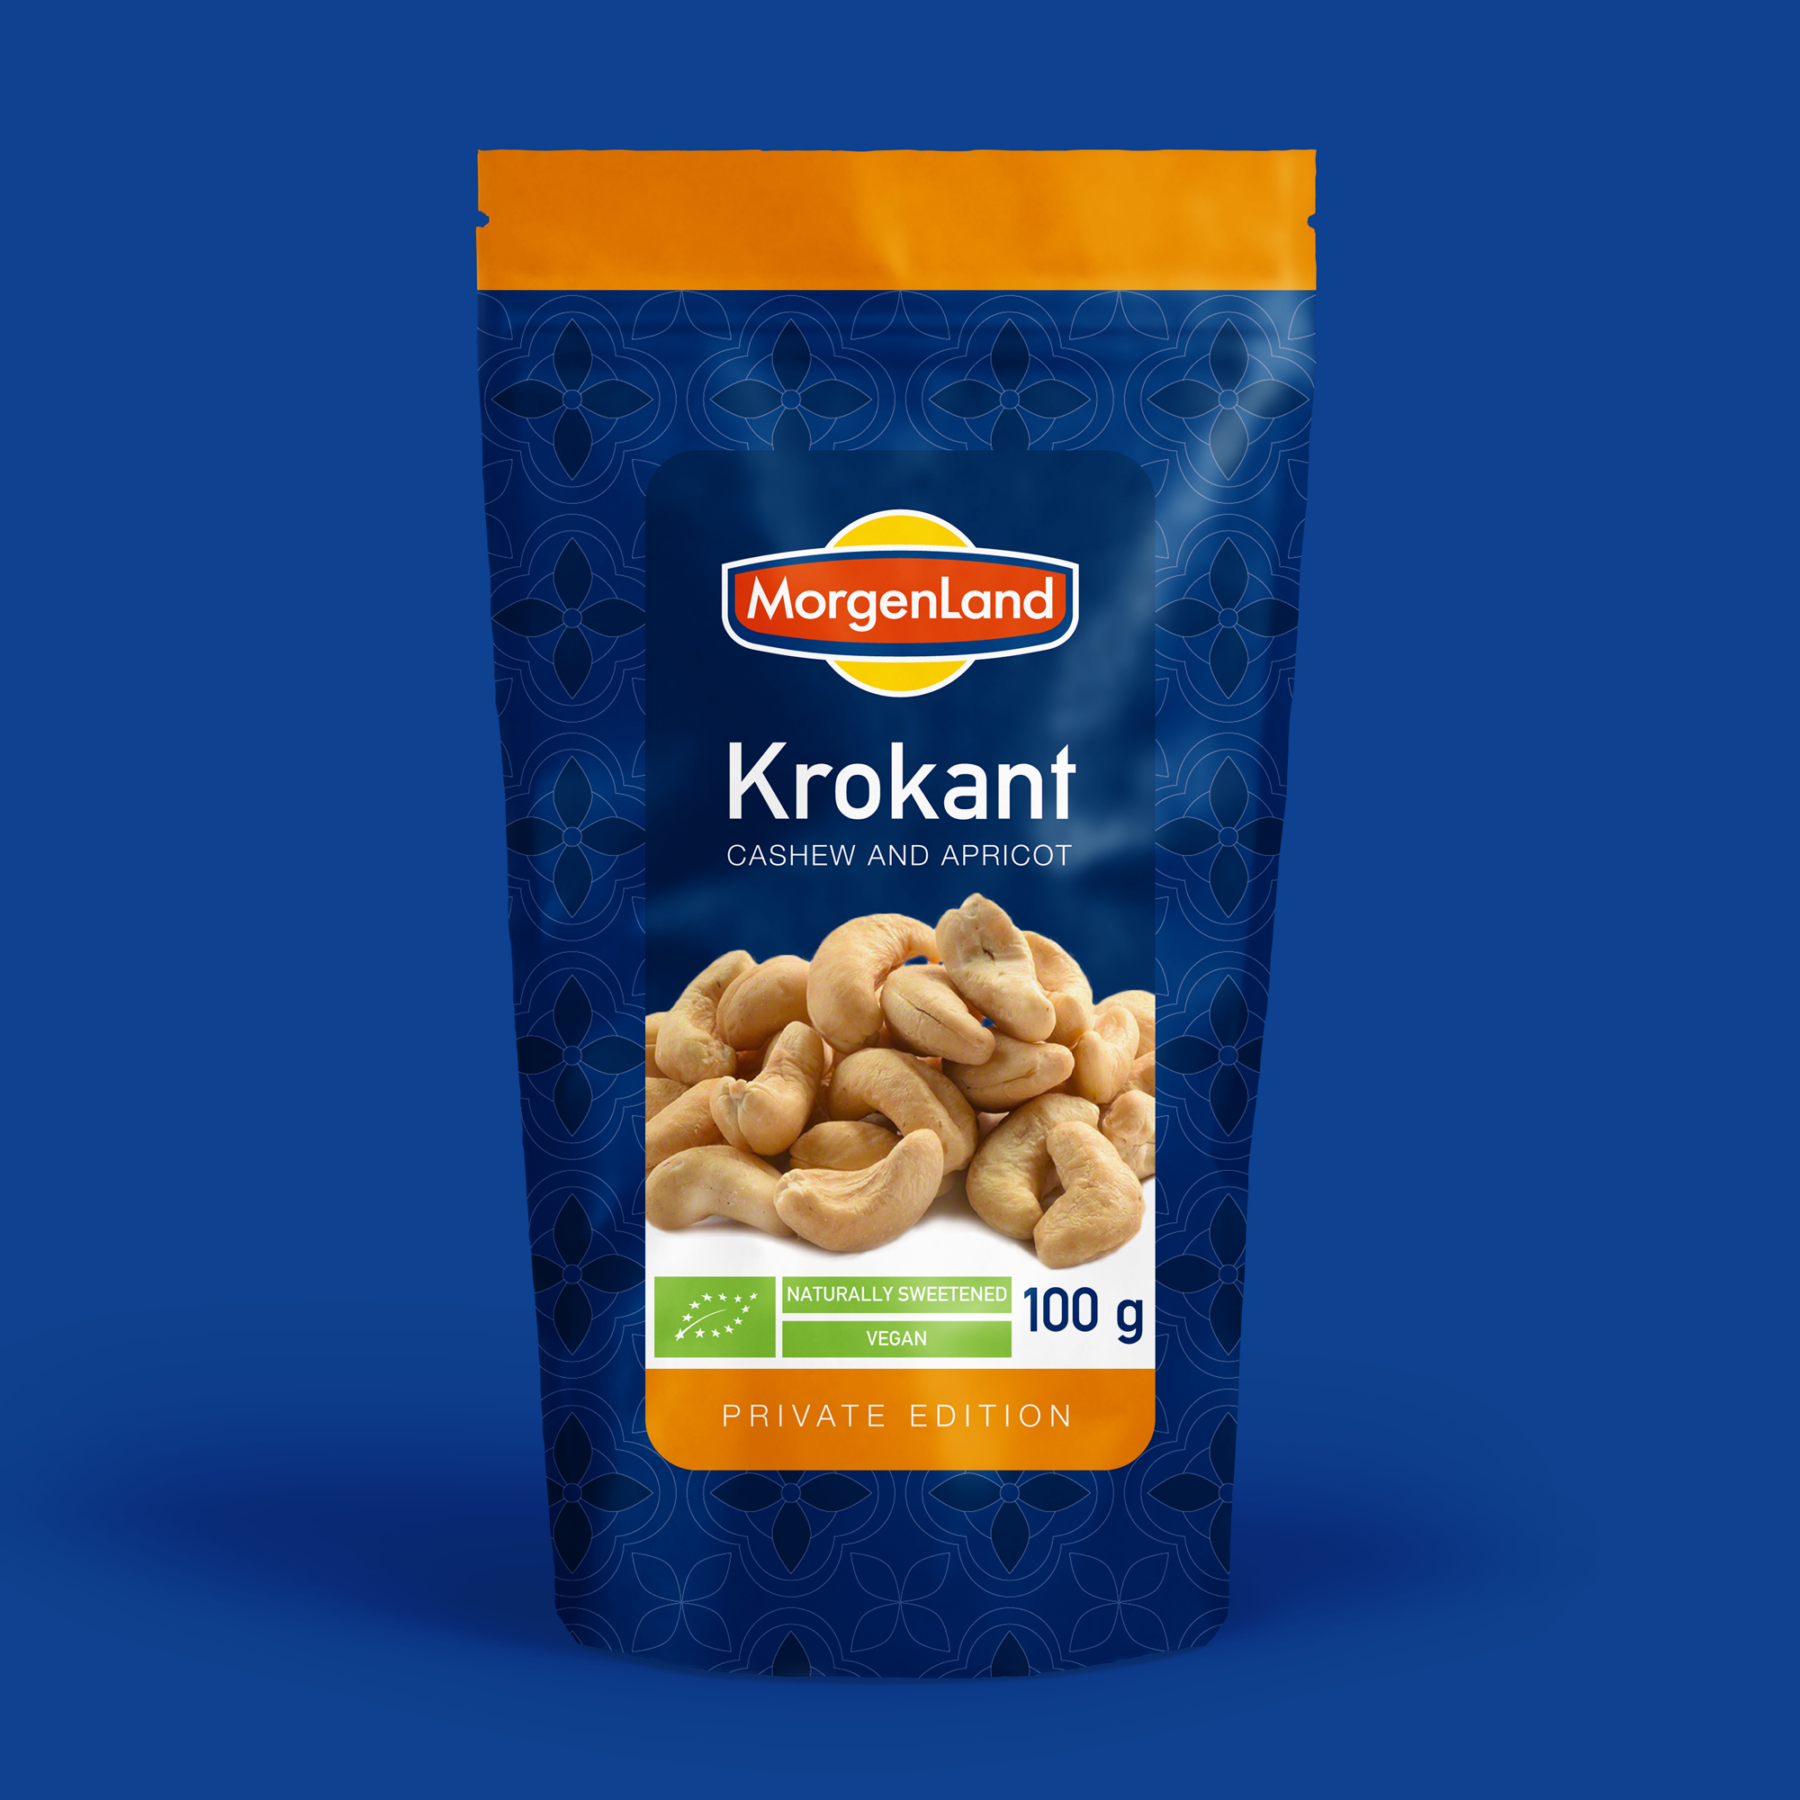 doy-pack-krokant-cashew-220-120-0004-002d72